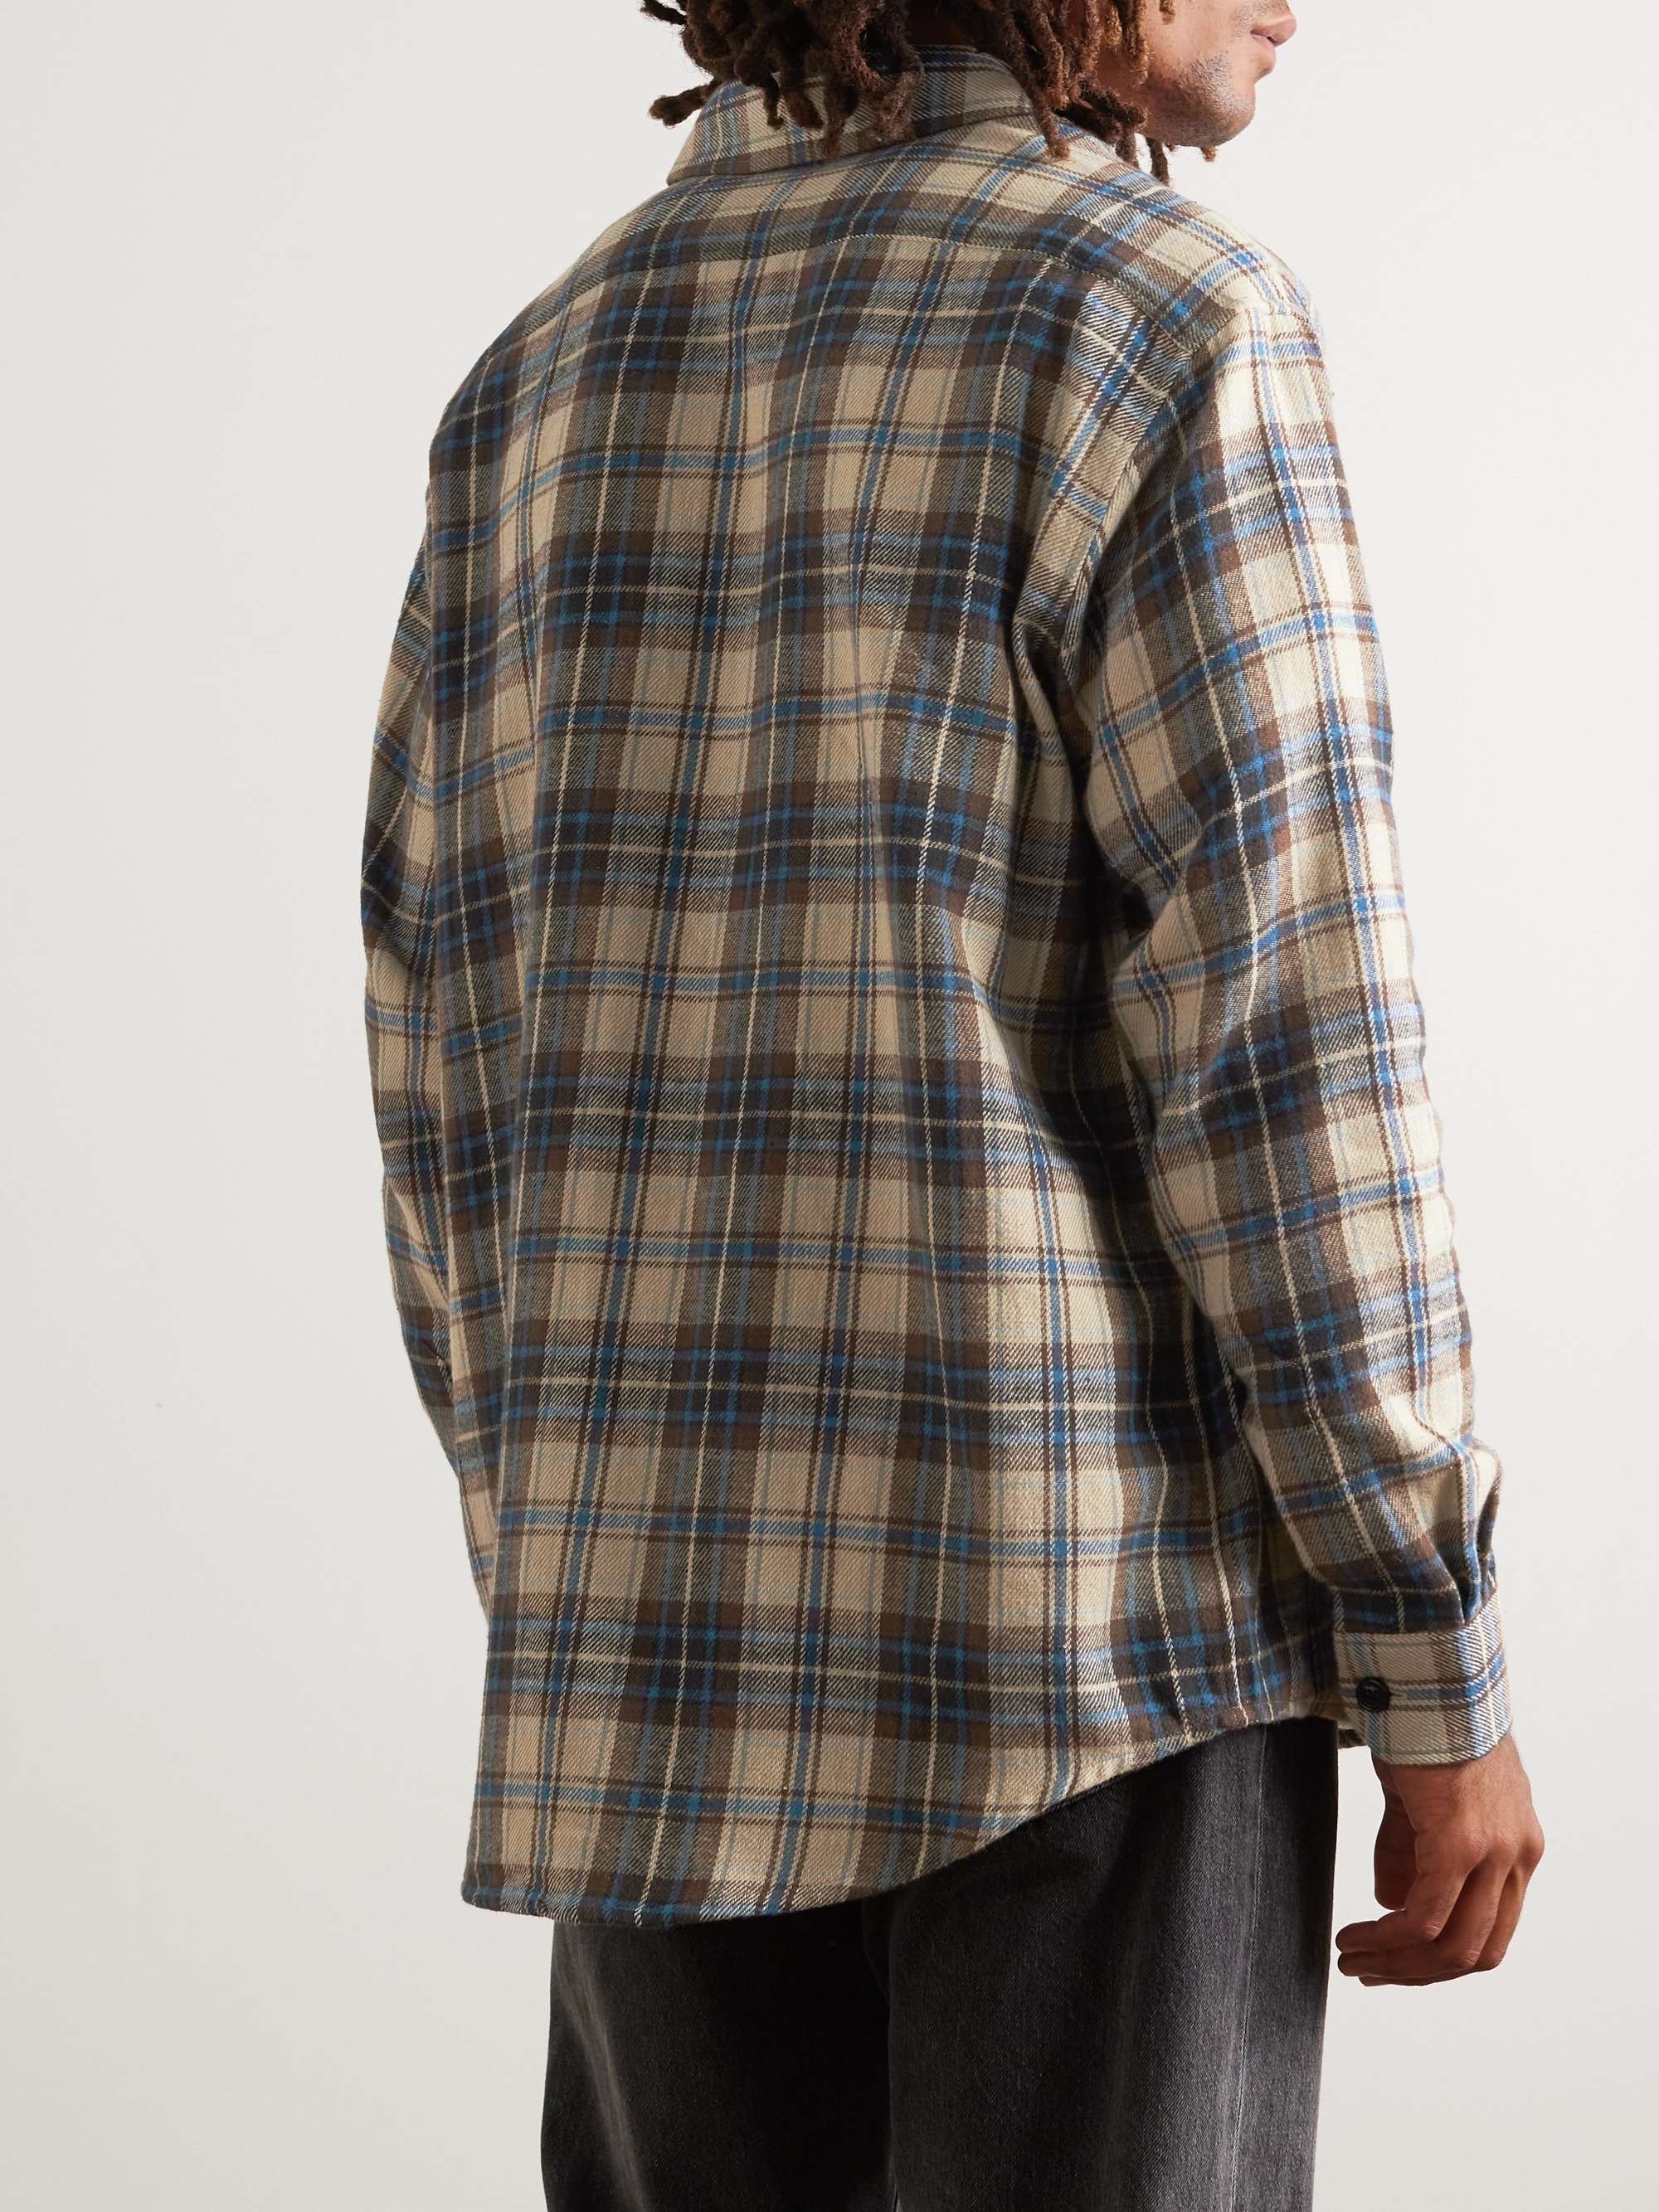 CELINE HOMME Plaid Cotton-Flannel Shirt for Men | MR PORTER